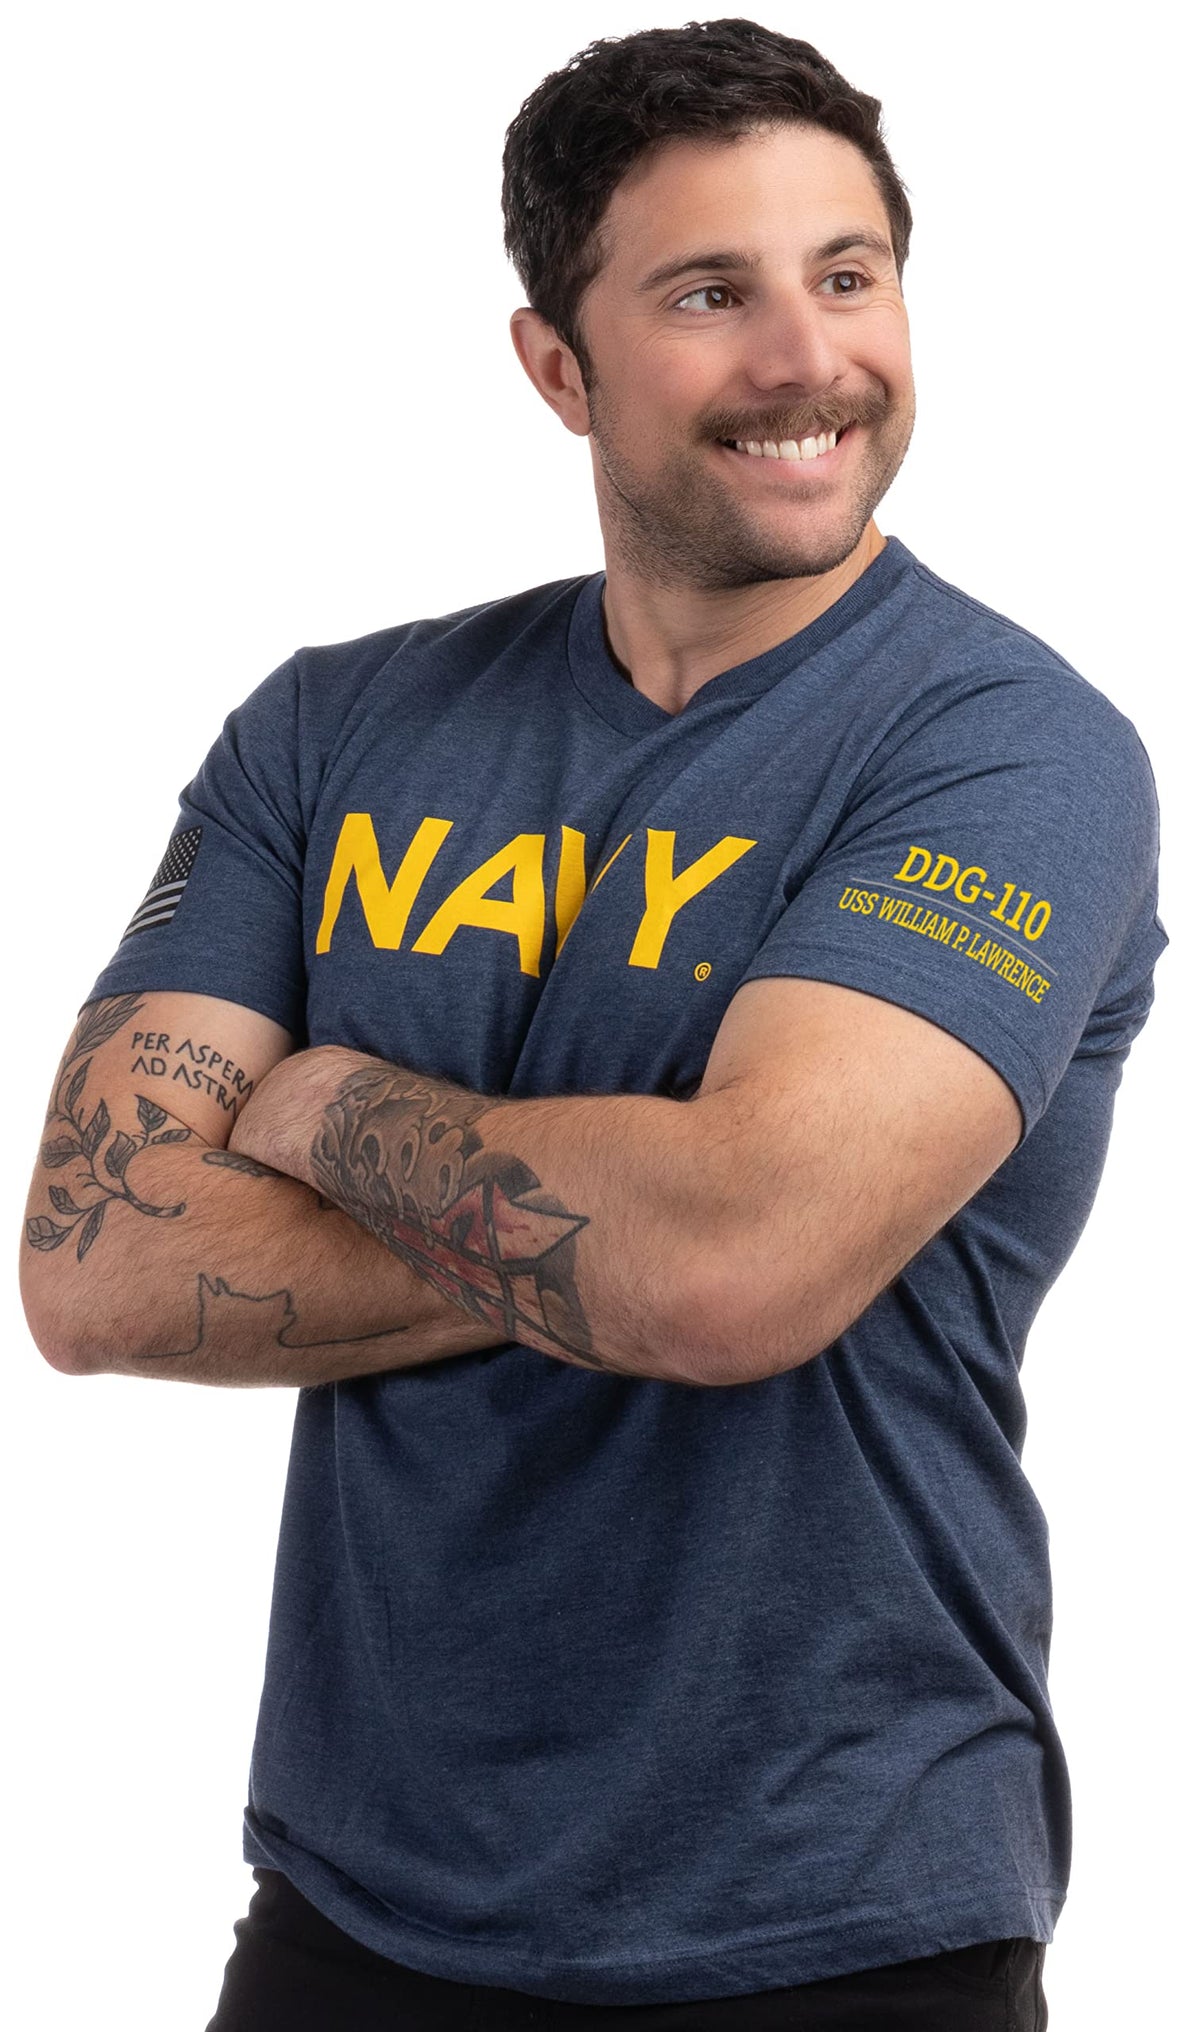 USS William P. Lawrence, DDG-110 | U.S. Navy Sailor Veteran USN United States Naval T-shirt for Men Women